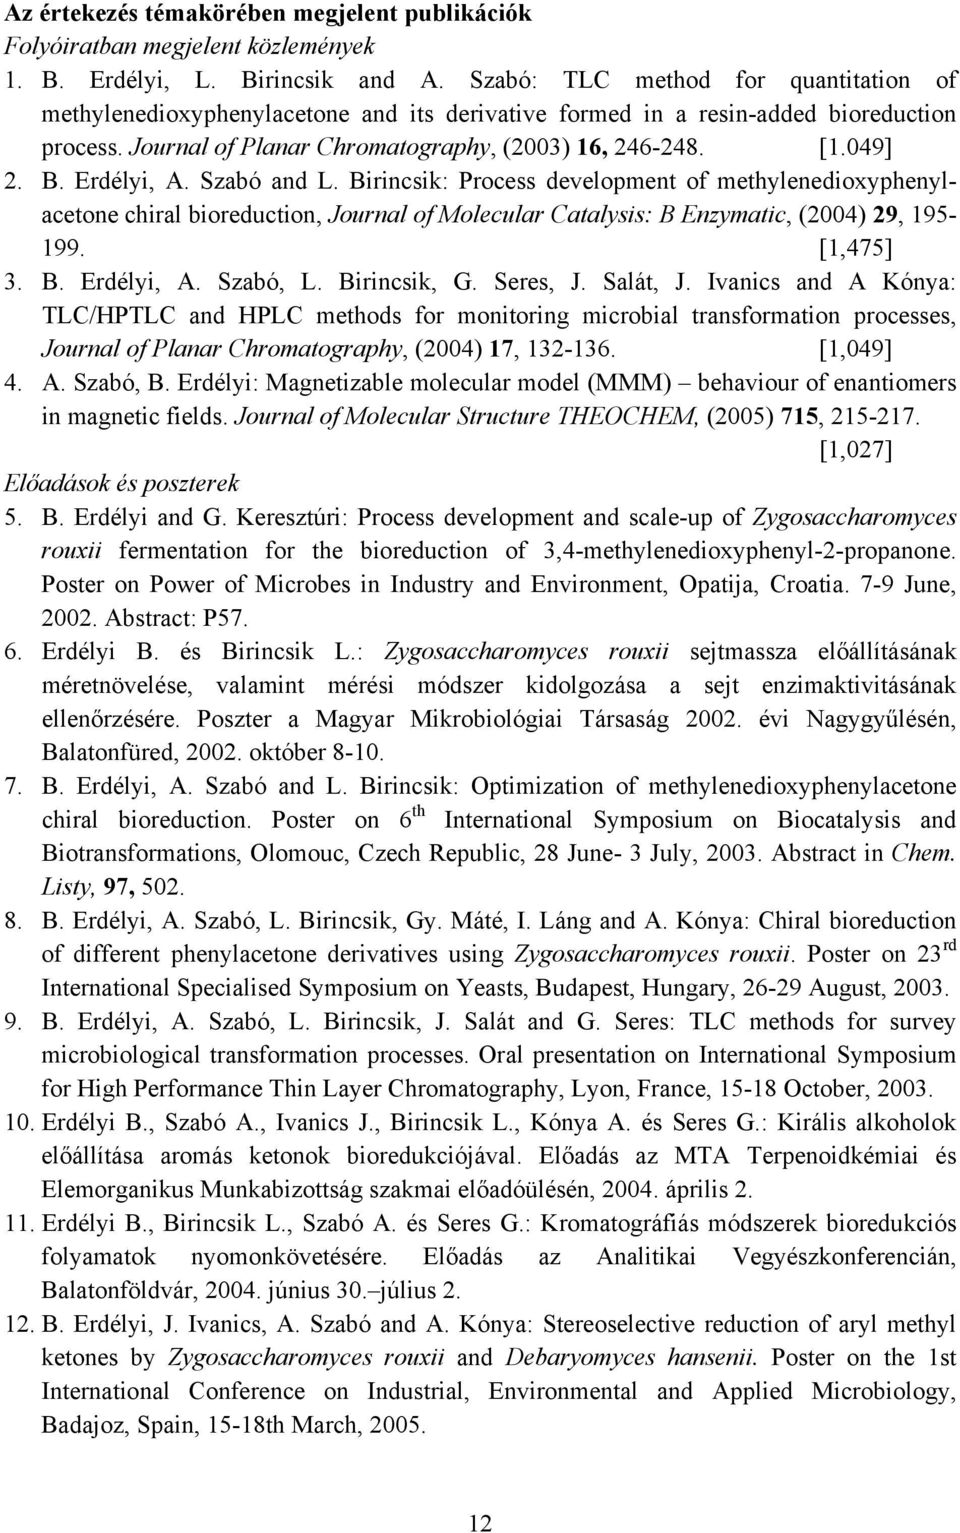 Erdélyi, A. Szabó and L. Birincsik: Process development of methylenedioxyphenylacetone chiral bioreduction, Journal of Molecular Catalysis: B Enzymatic, (2004) 29, 195-199. [1,475] 3. B. Erdélyi, A.